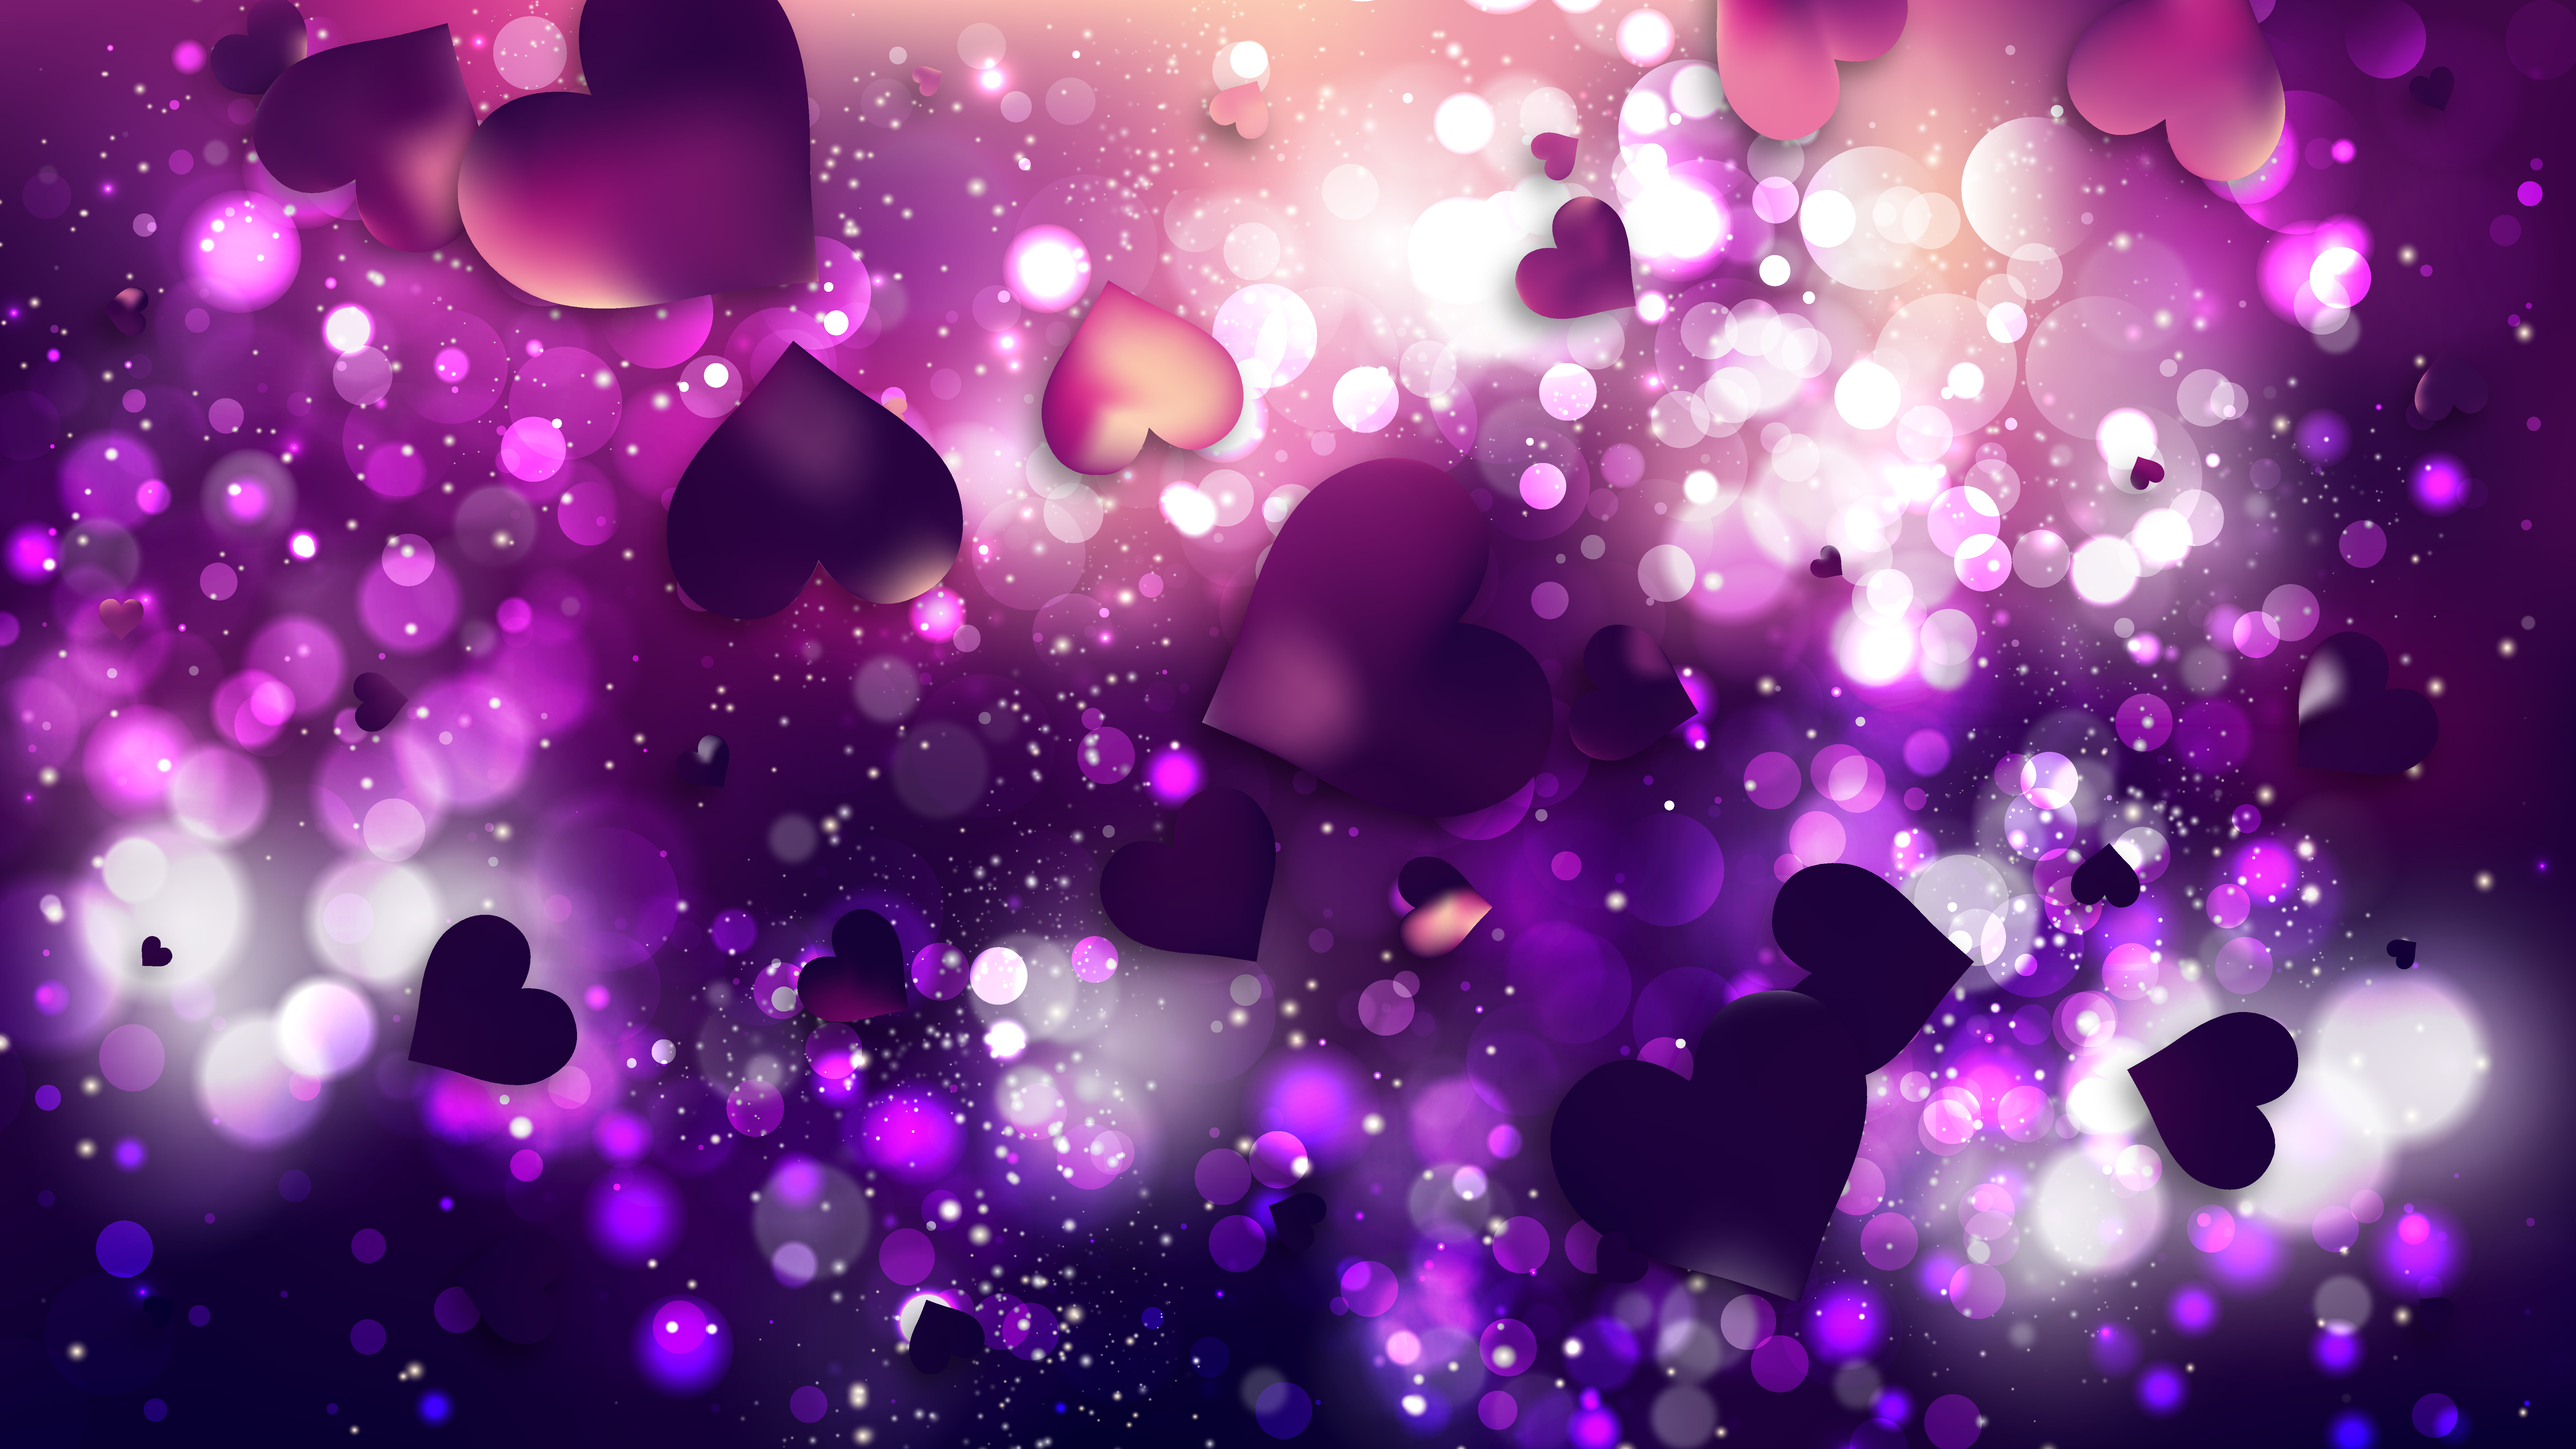 Free Purple and Black Valentines Background